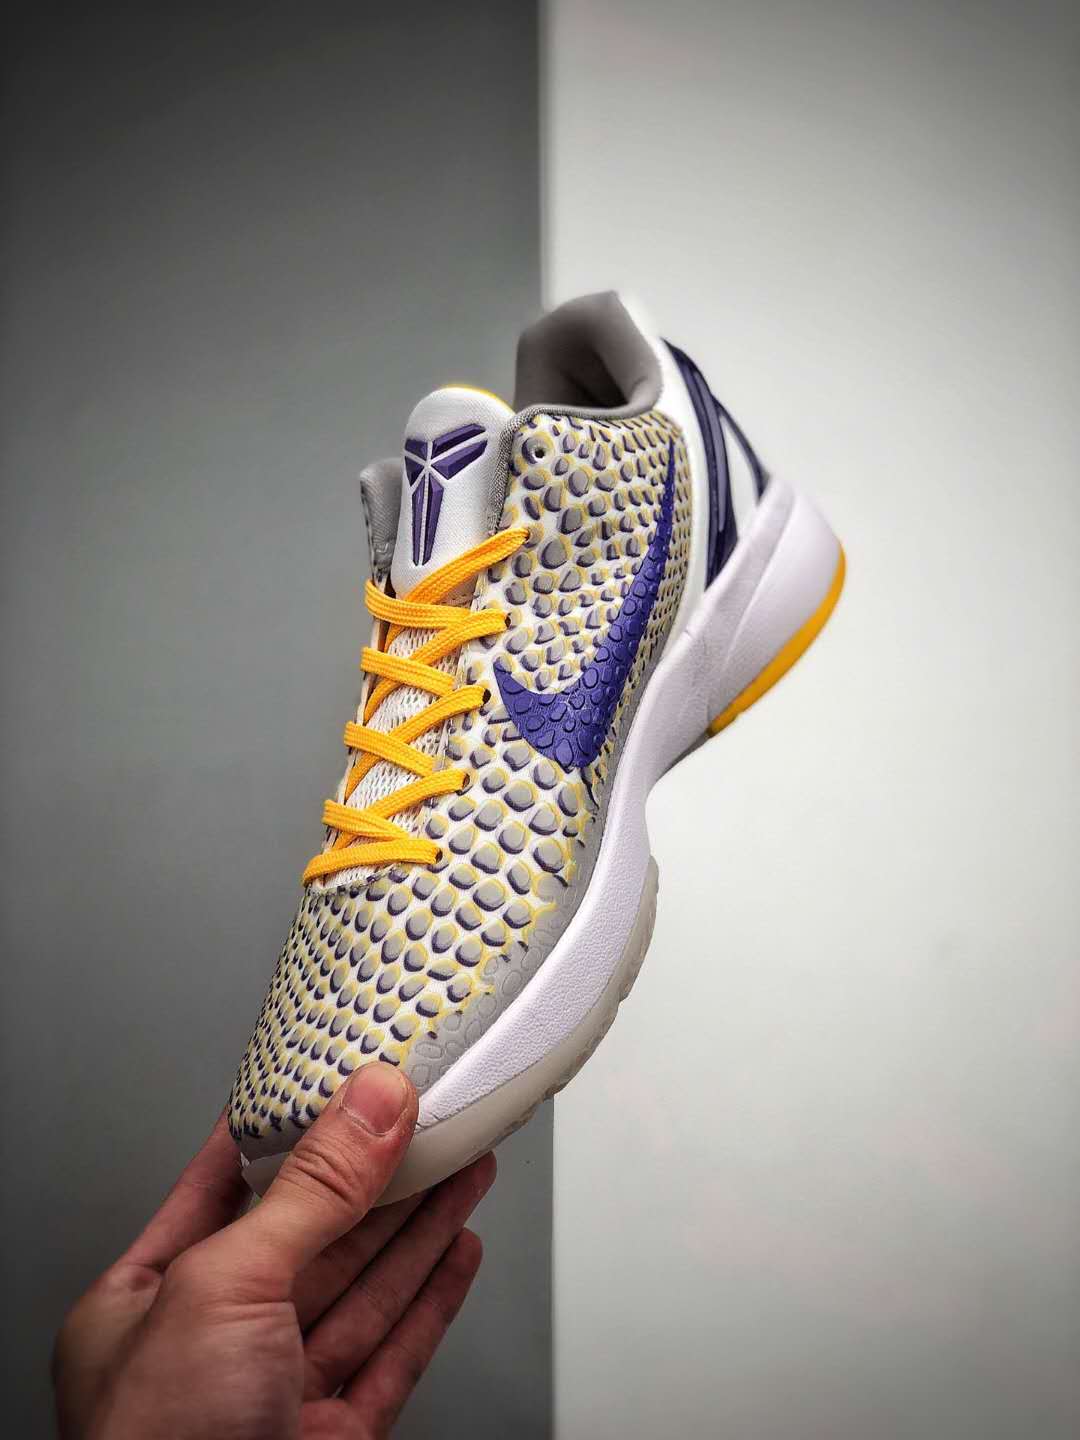 Nike Kobe 6 VI White Purple Yellow Basketball Shoes CW2190-105 - Stylish and High-Performance Footwear